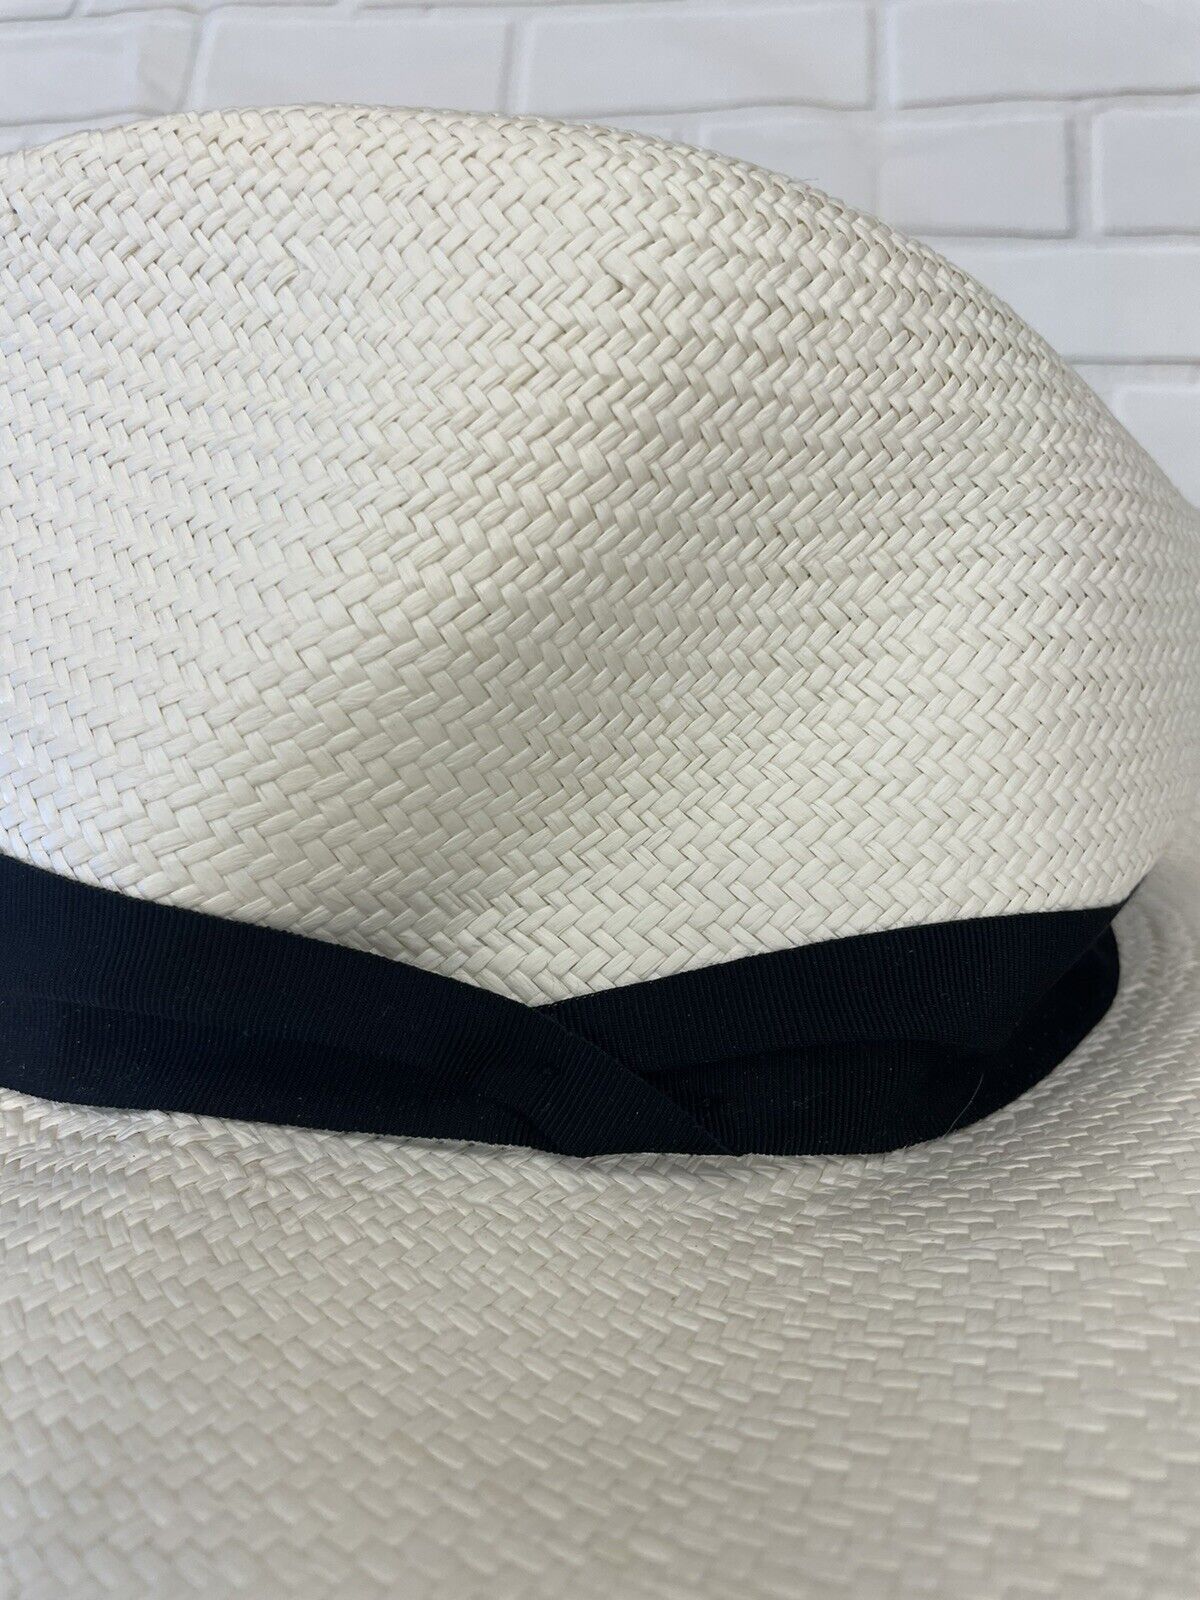 rag & bone panama hat in white size M/L bnwt